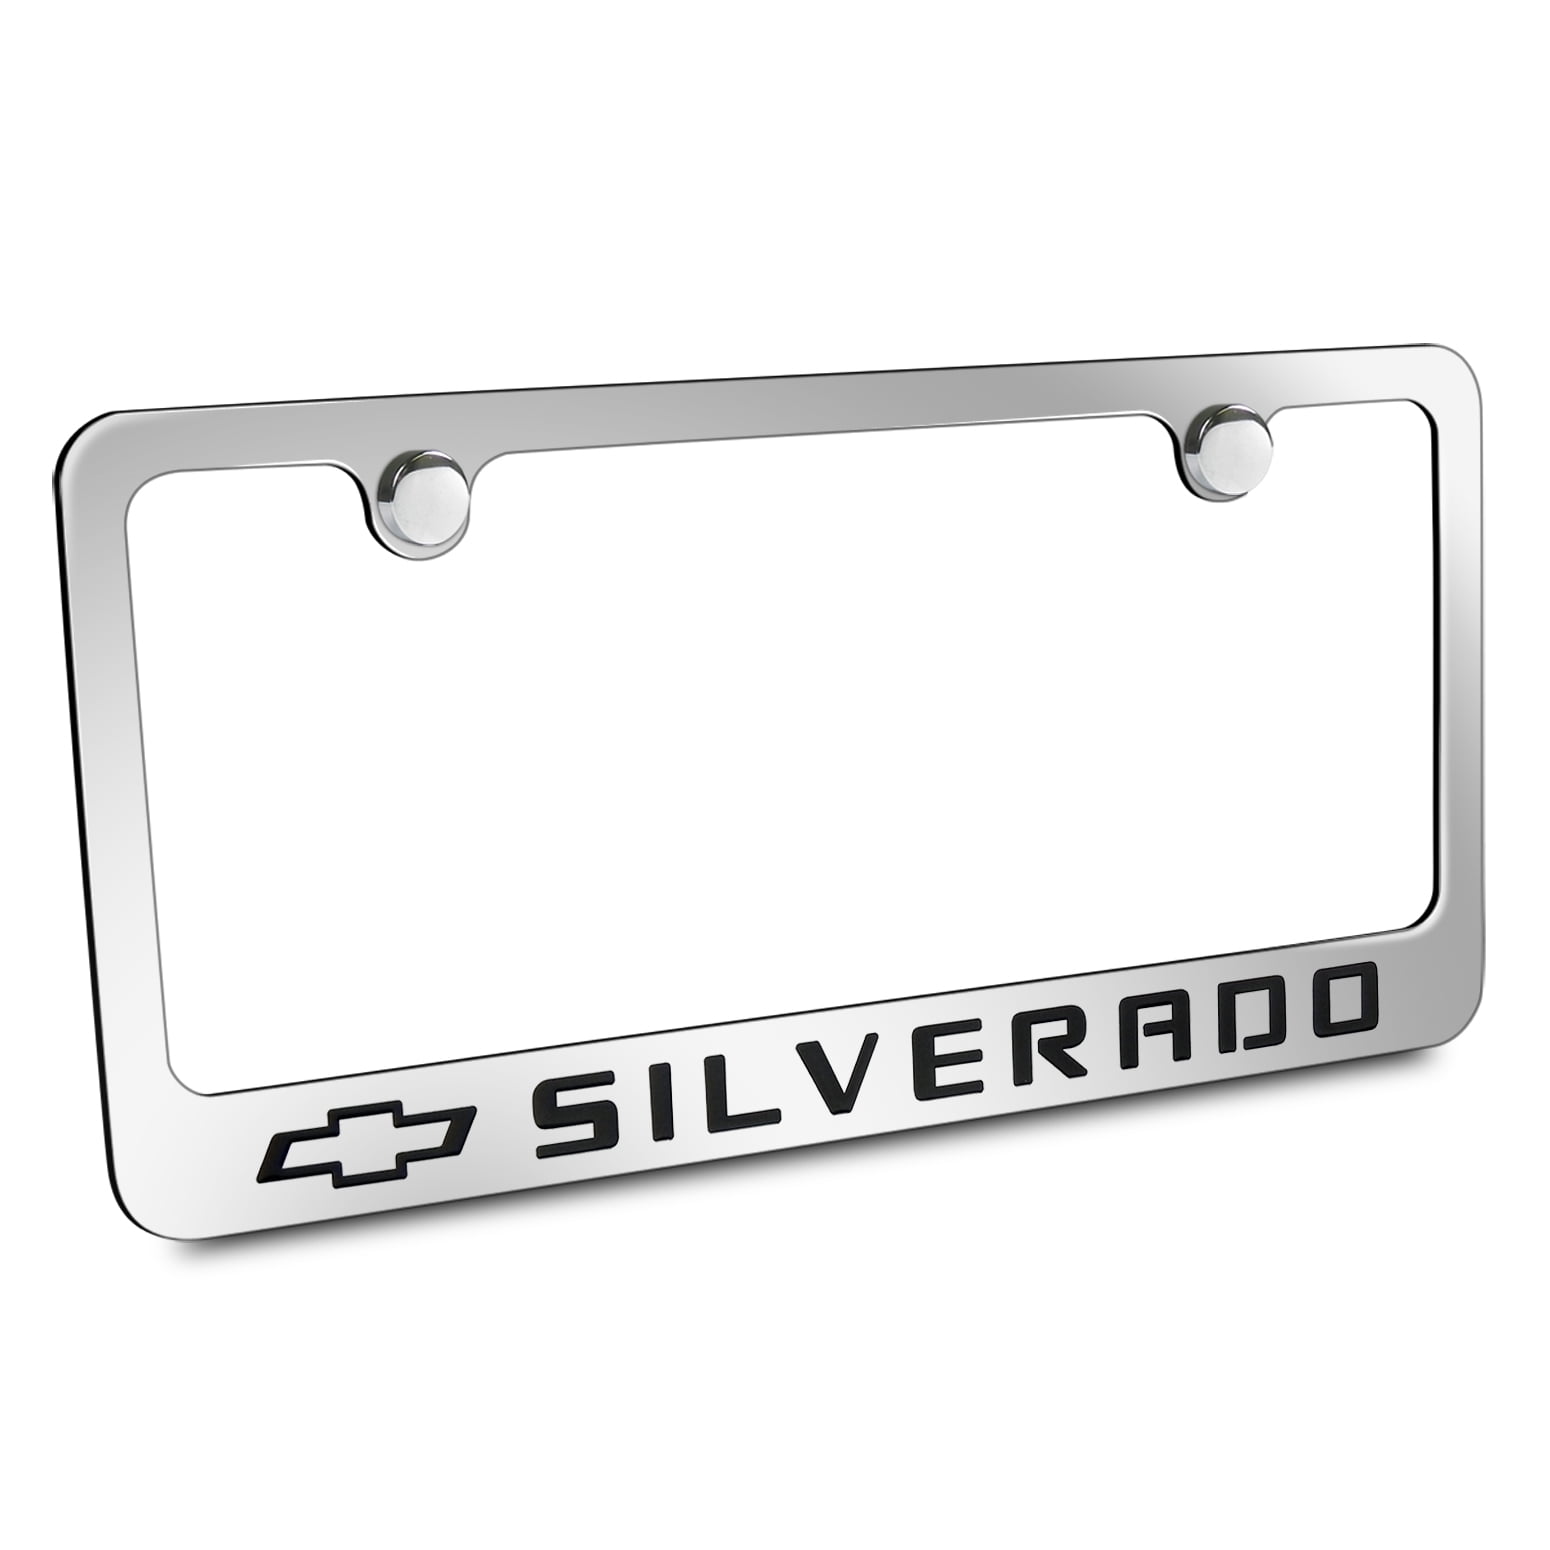 Chevrolet Silverado Chrome License Plate Frame with Caps